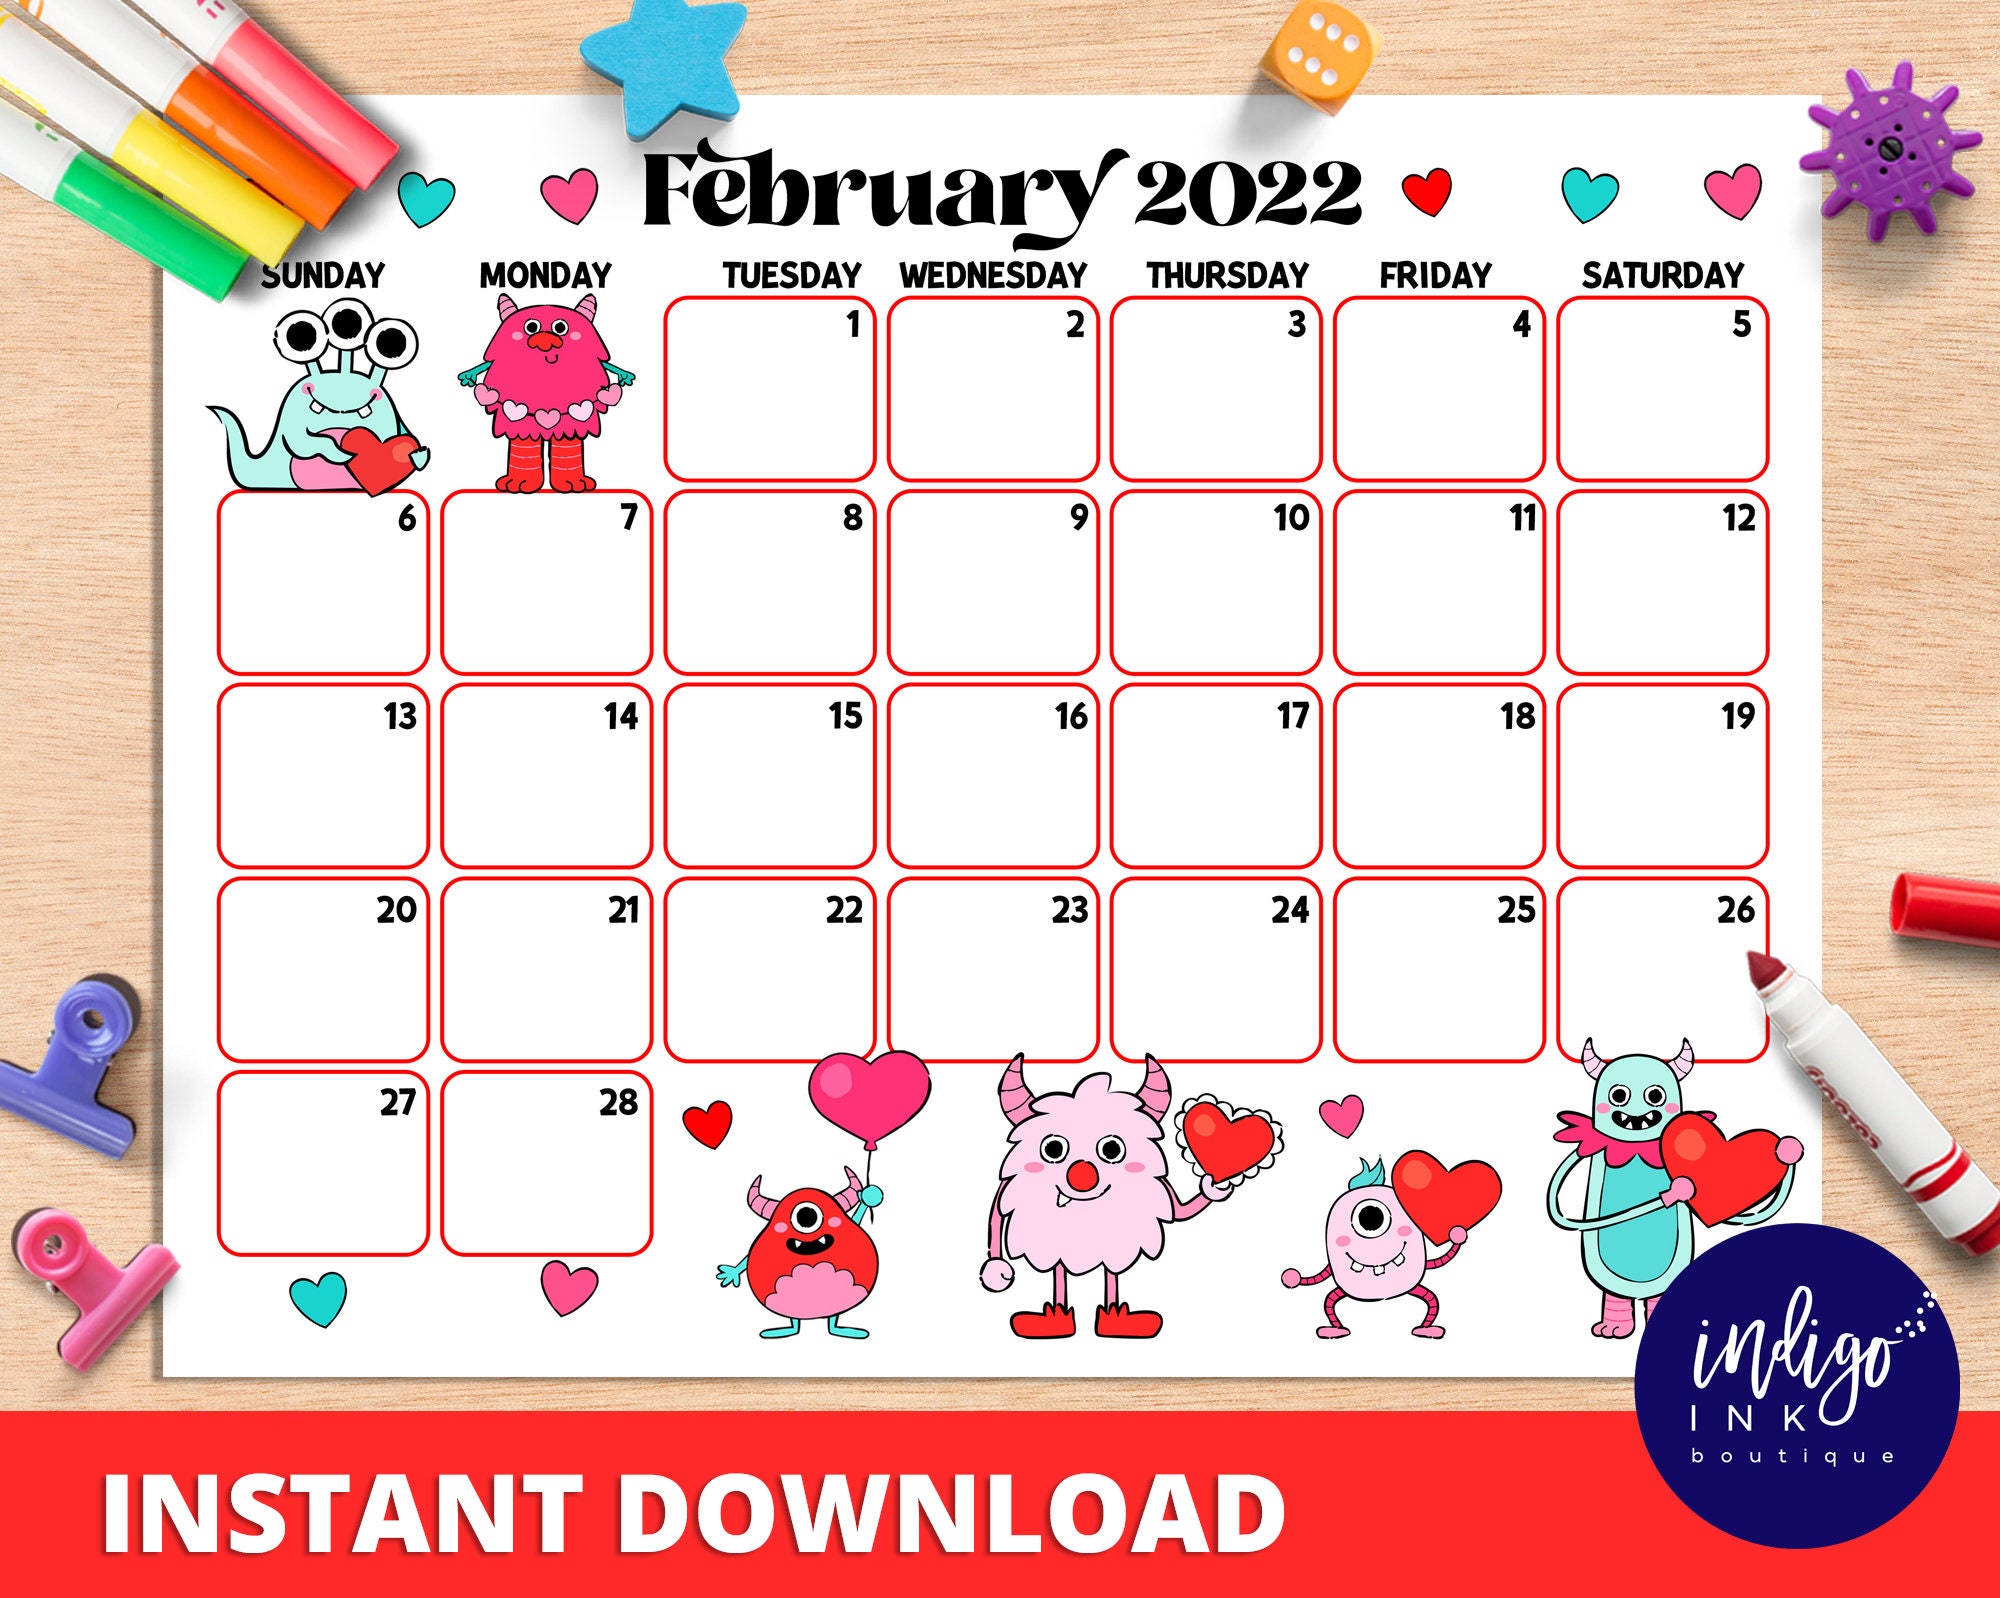 February Calendar 2022 Printable February 2022 Calendar Instant Download Monthly Planner | Etsy Singapore